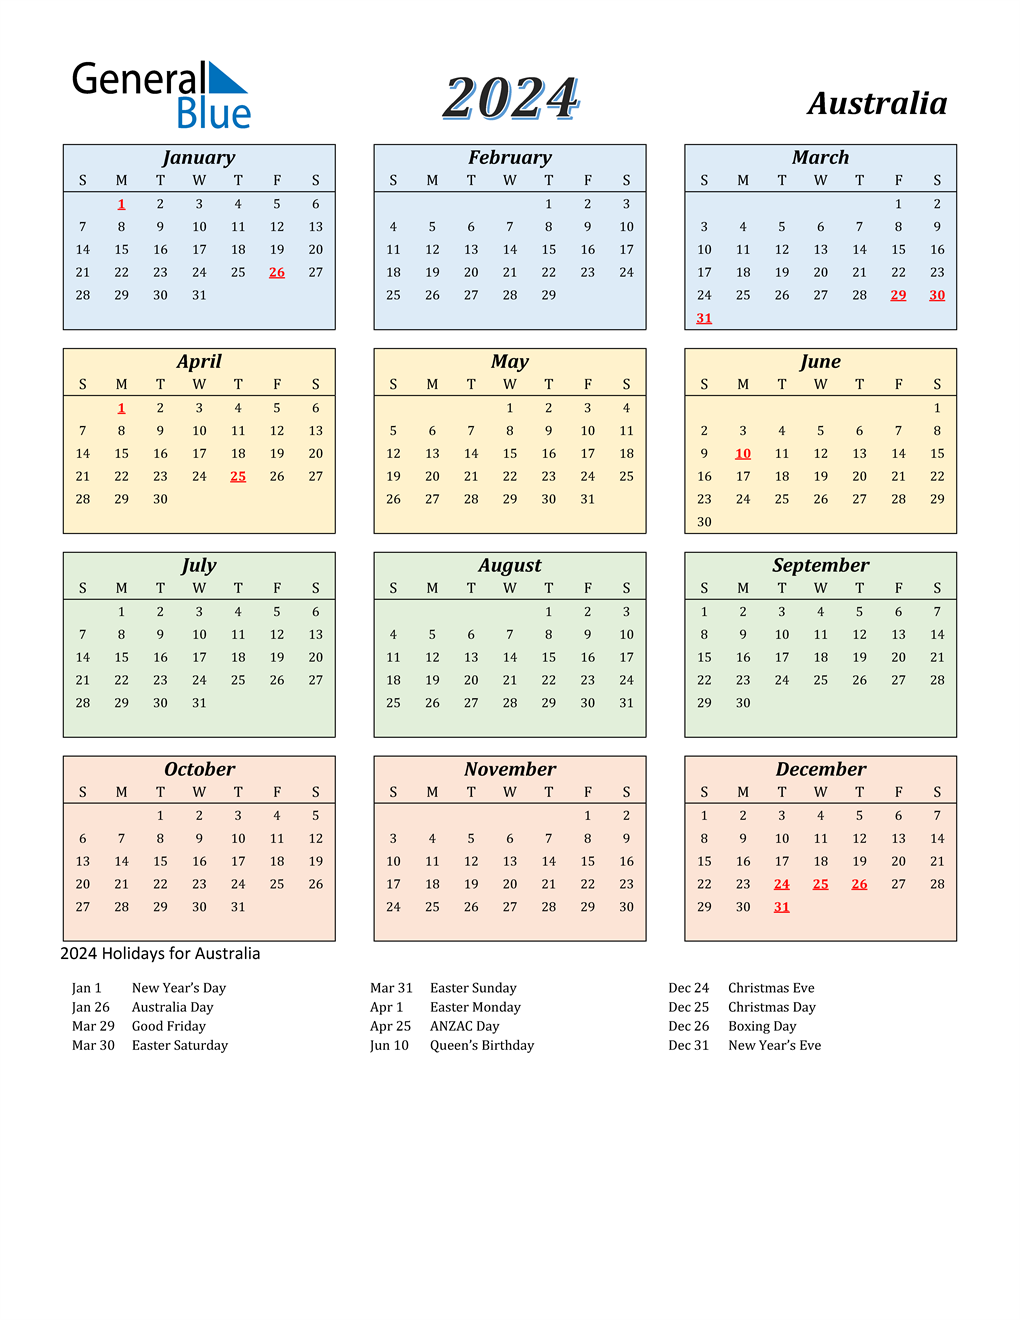 Victoria Public Holidays 2023 Calendar Calendar 2023 With Federal